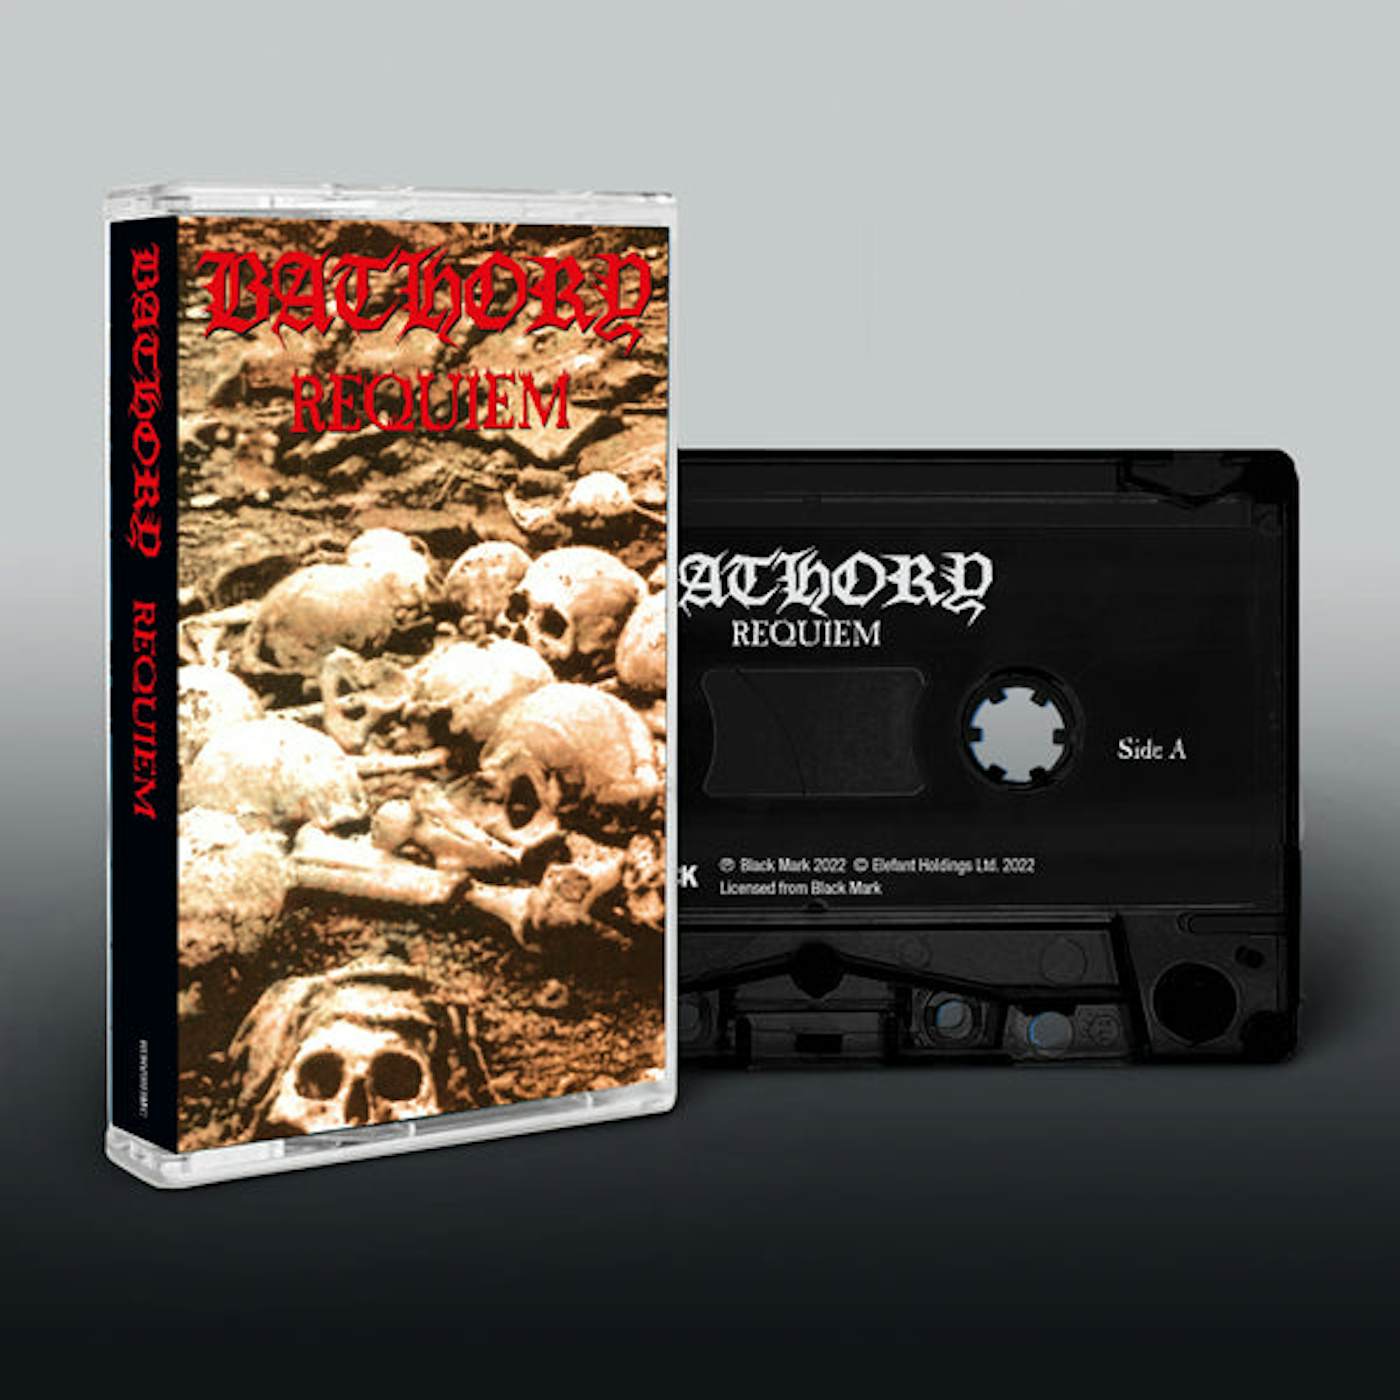 Bathory Music Cassette - Requiem